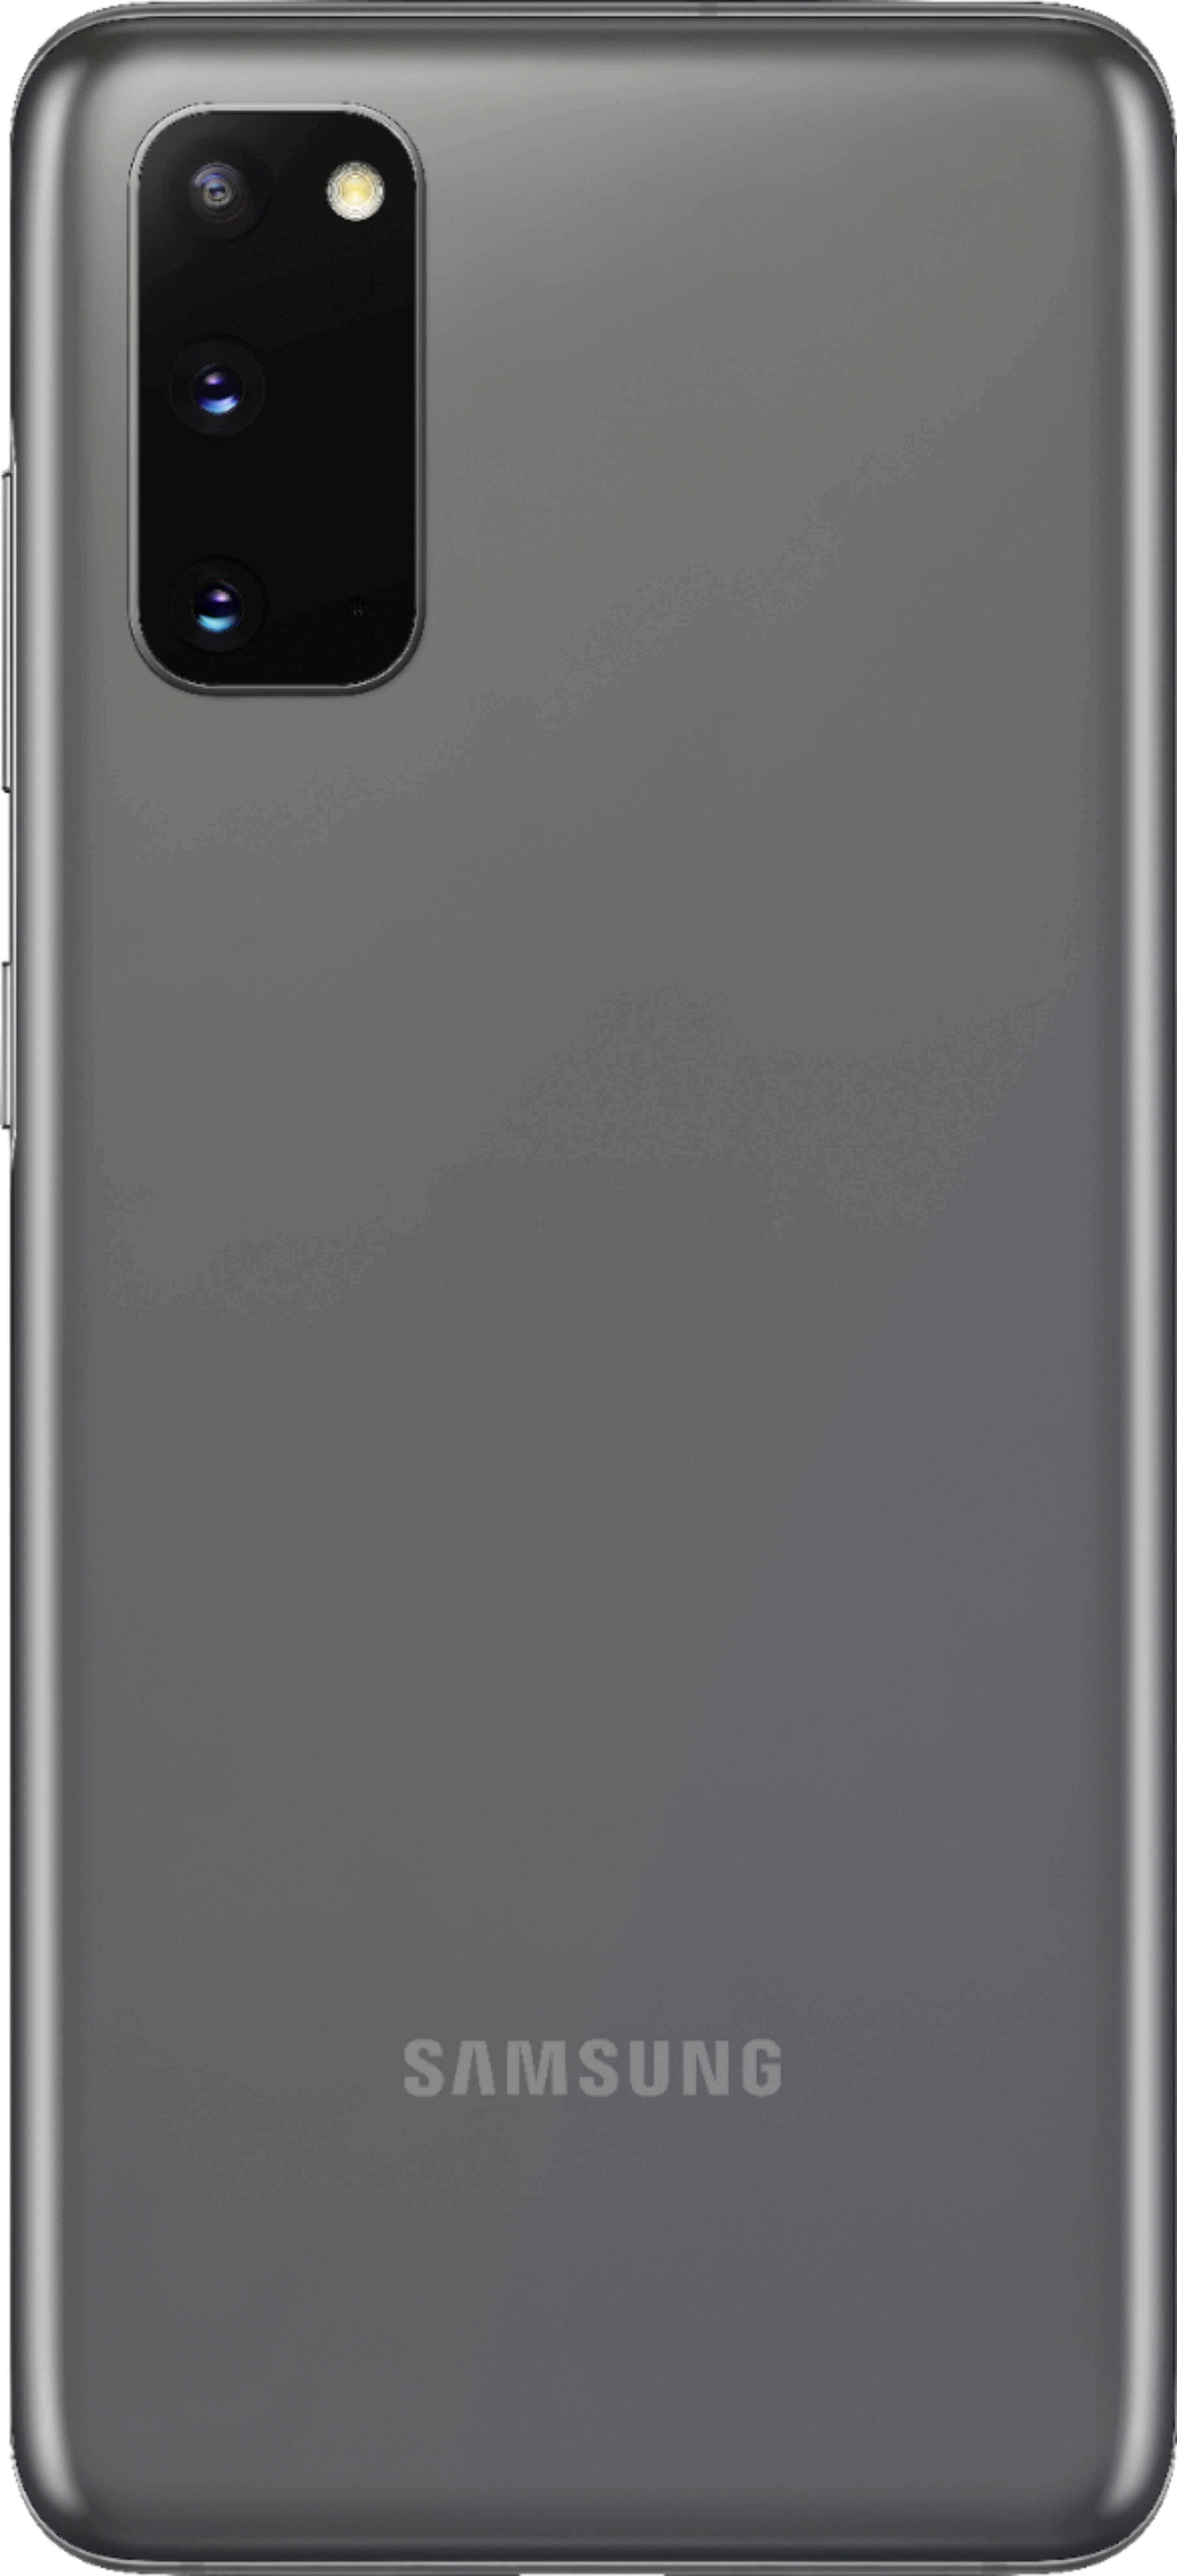 Samsung Galaxy S20 5G Unboxing - Cosmic Gray 